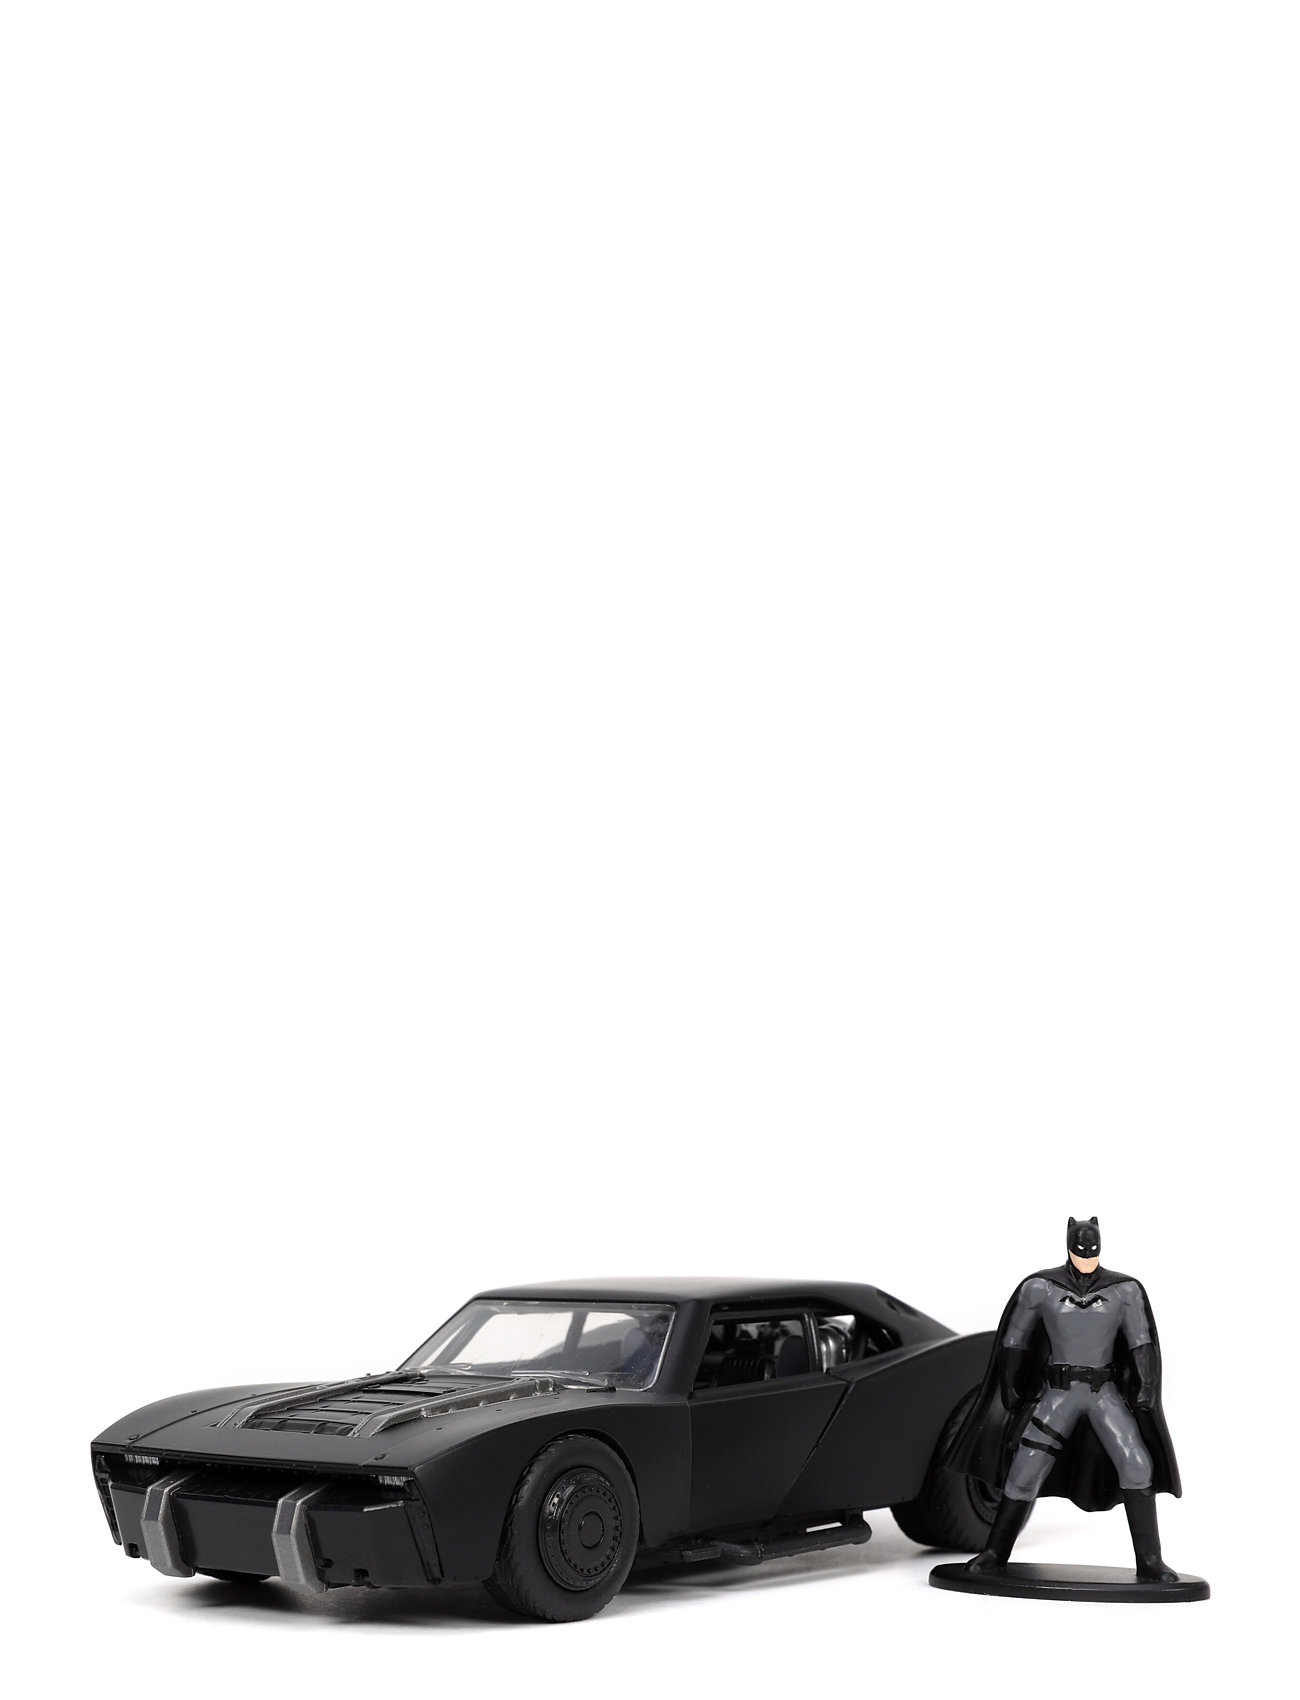 Batman Batmobile 2022, 1:32 Toys Playsets & Action Figures Action Figures Black Jada Toys